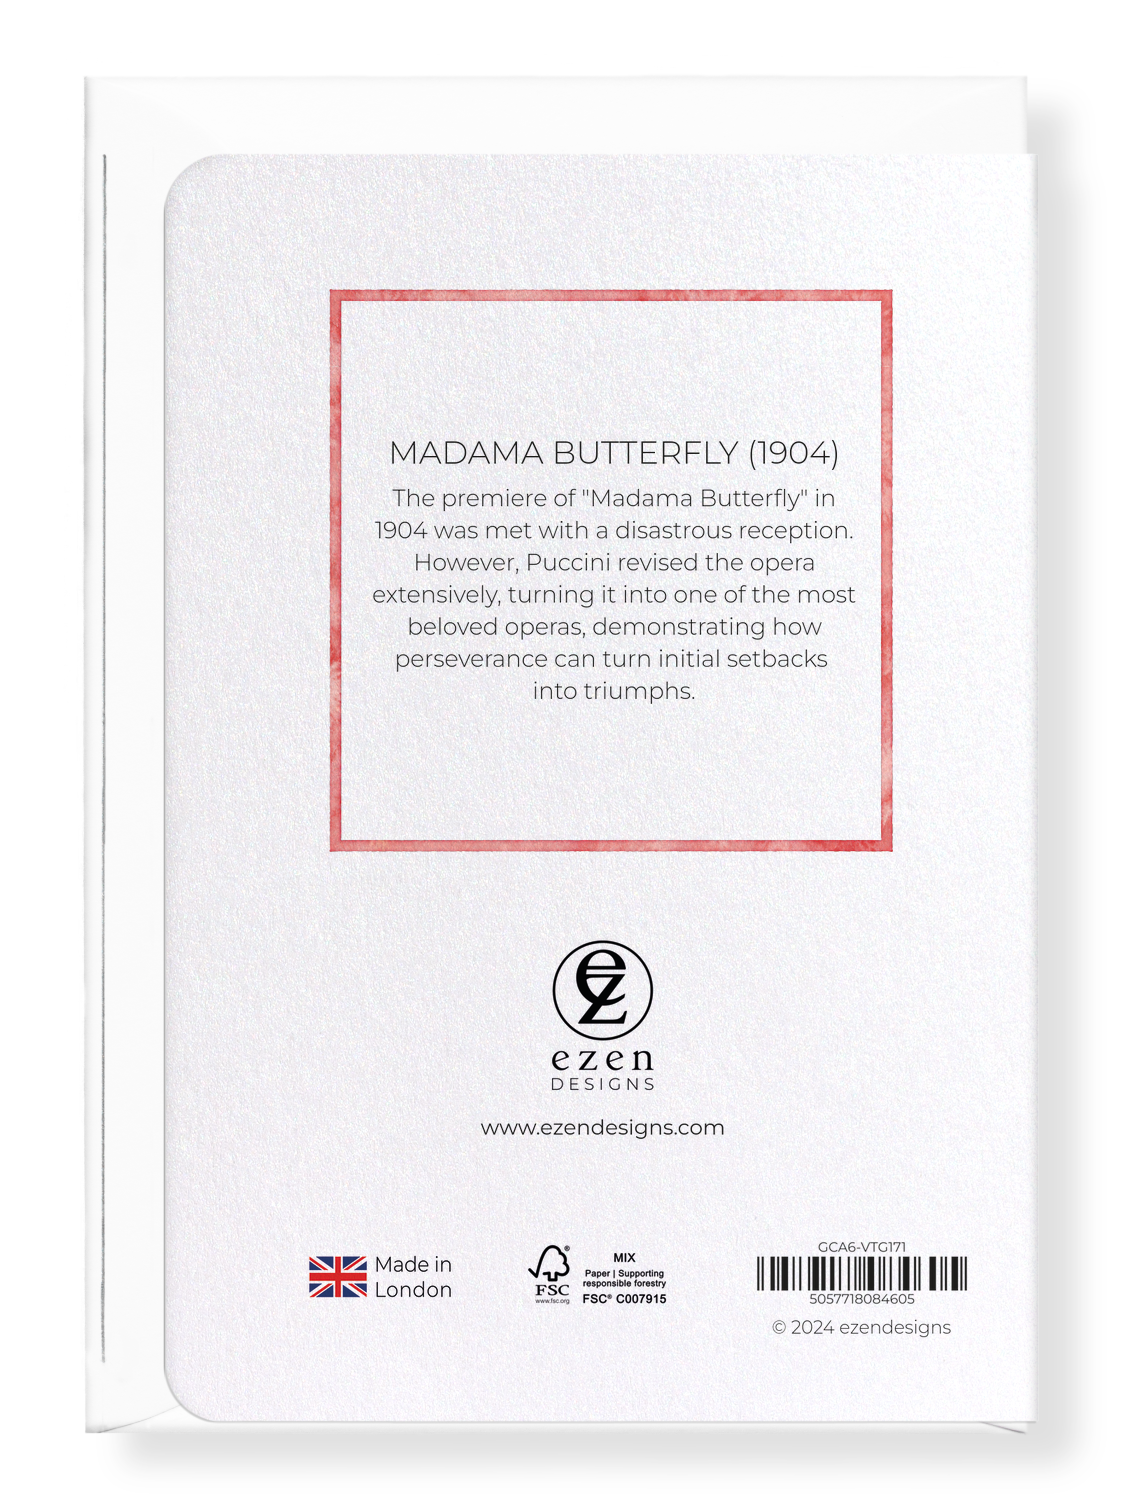 Ezen Designs - Madama Butterfly (1904) - Greeting Card - Back